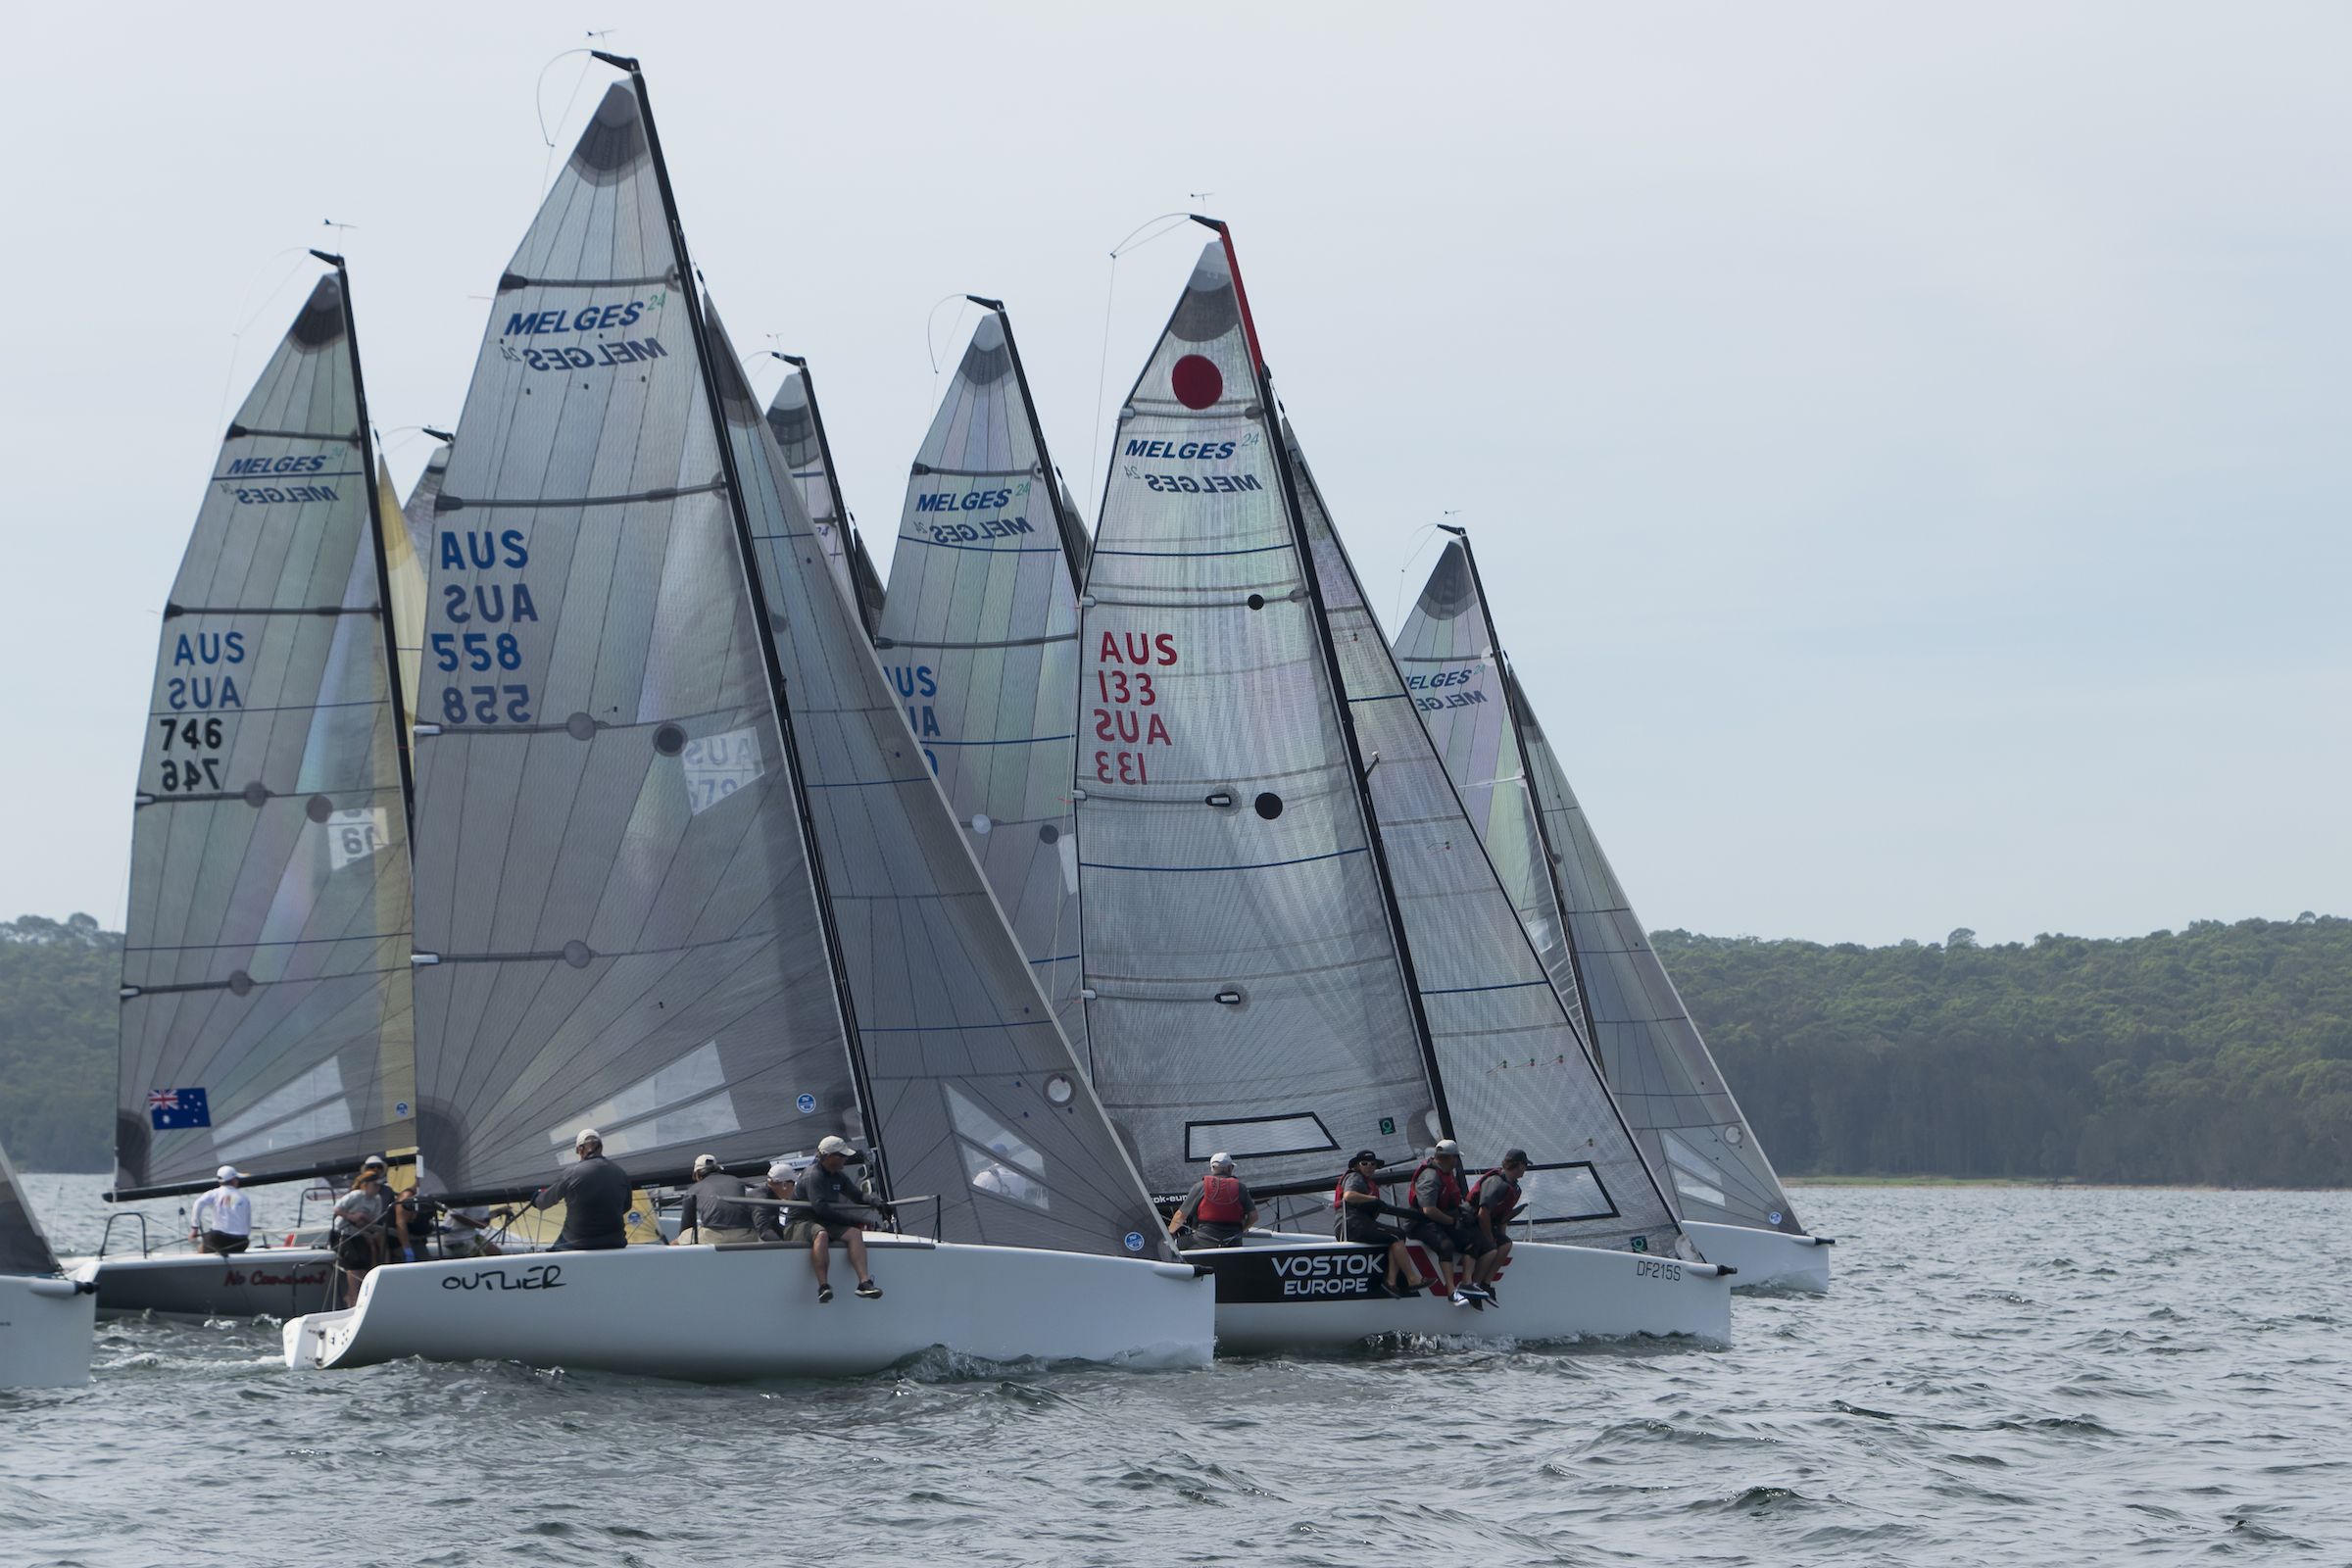 The Melges 24 fleet at 2016 AUS national championship